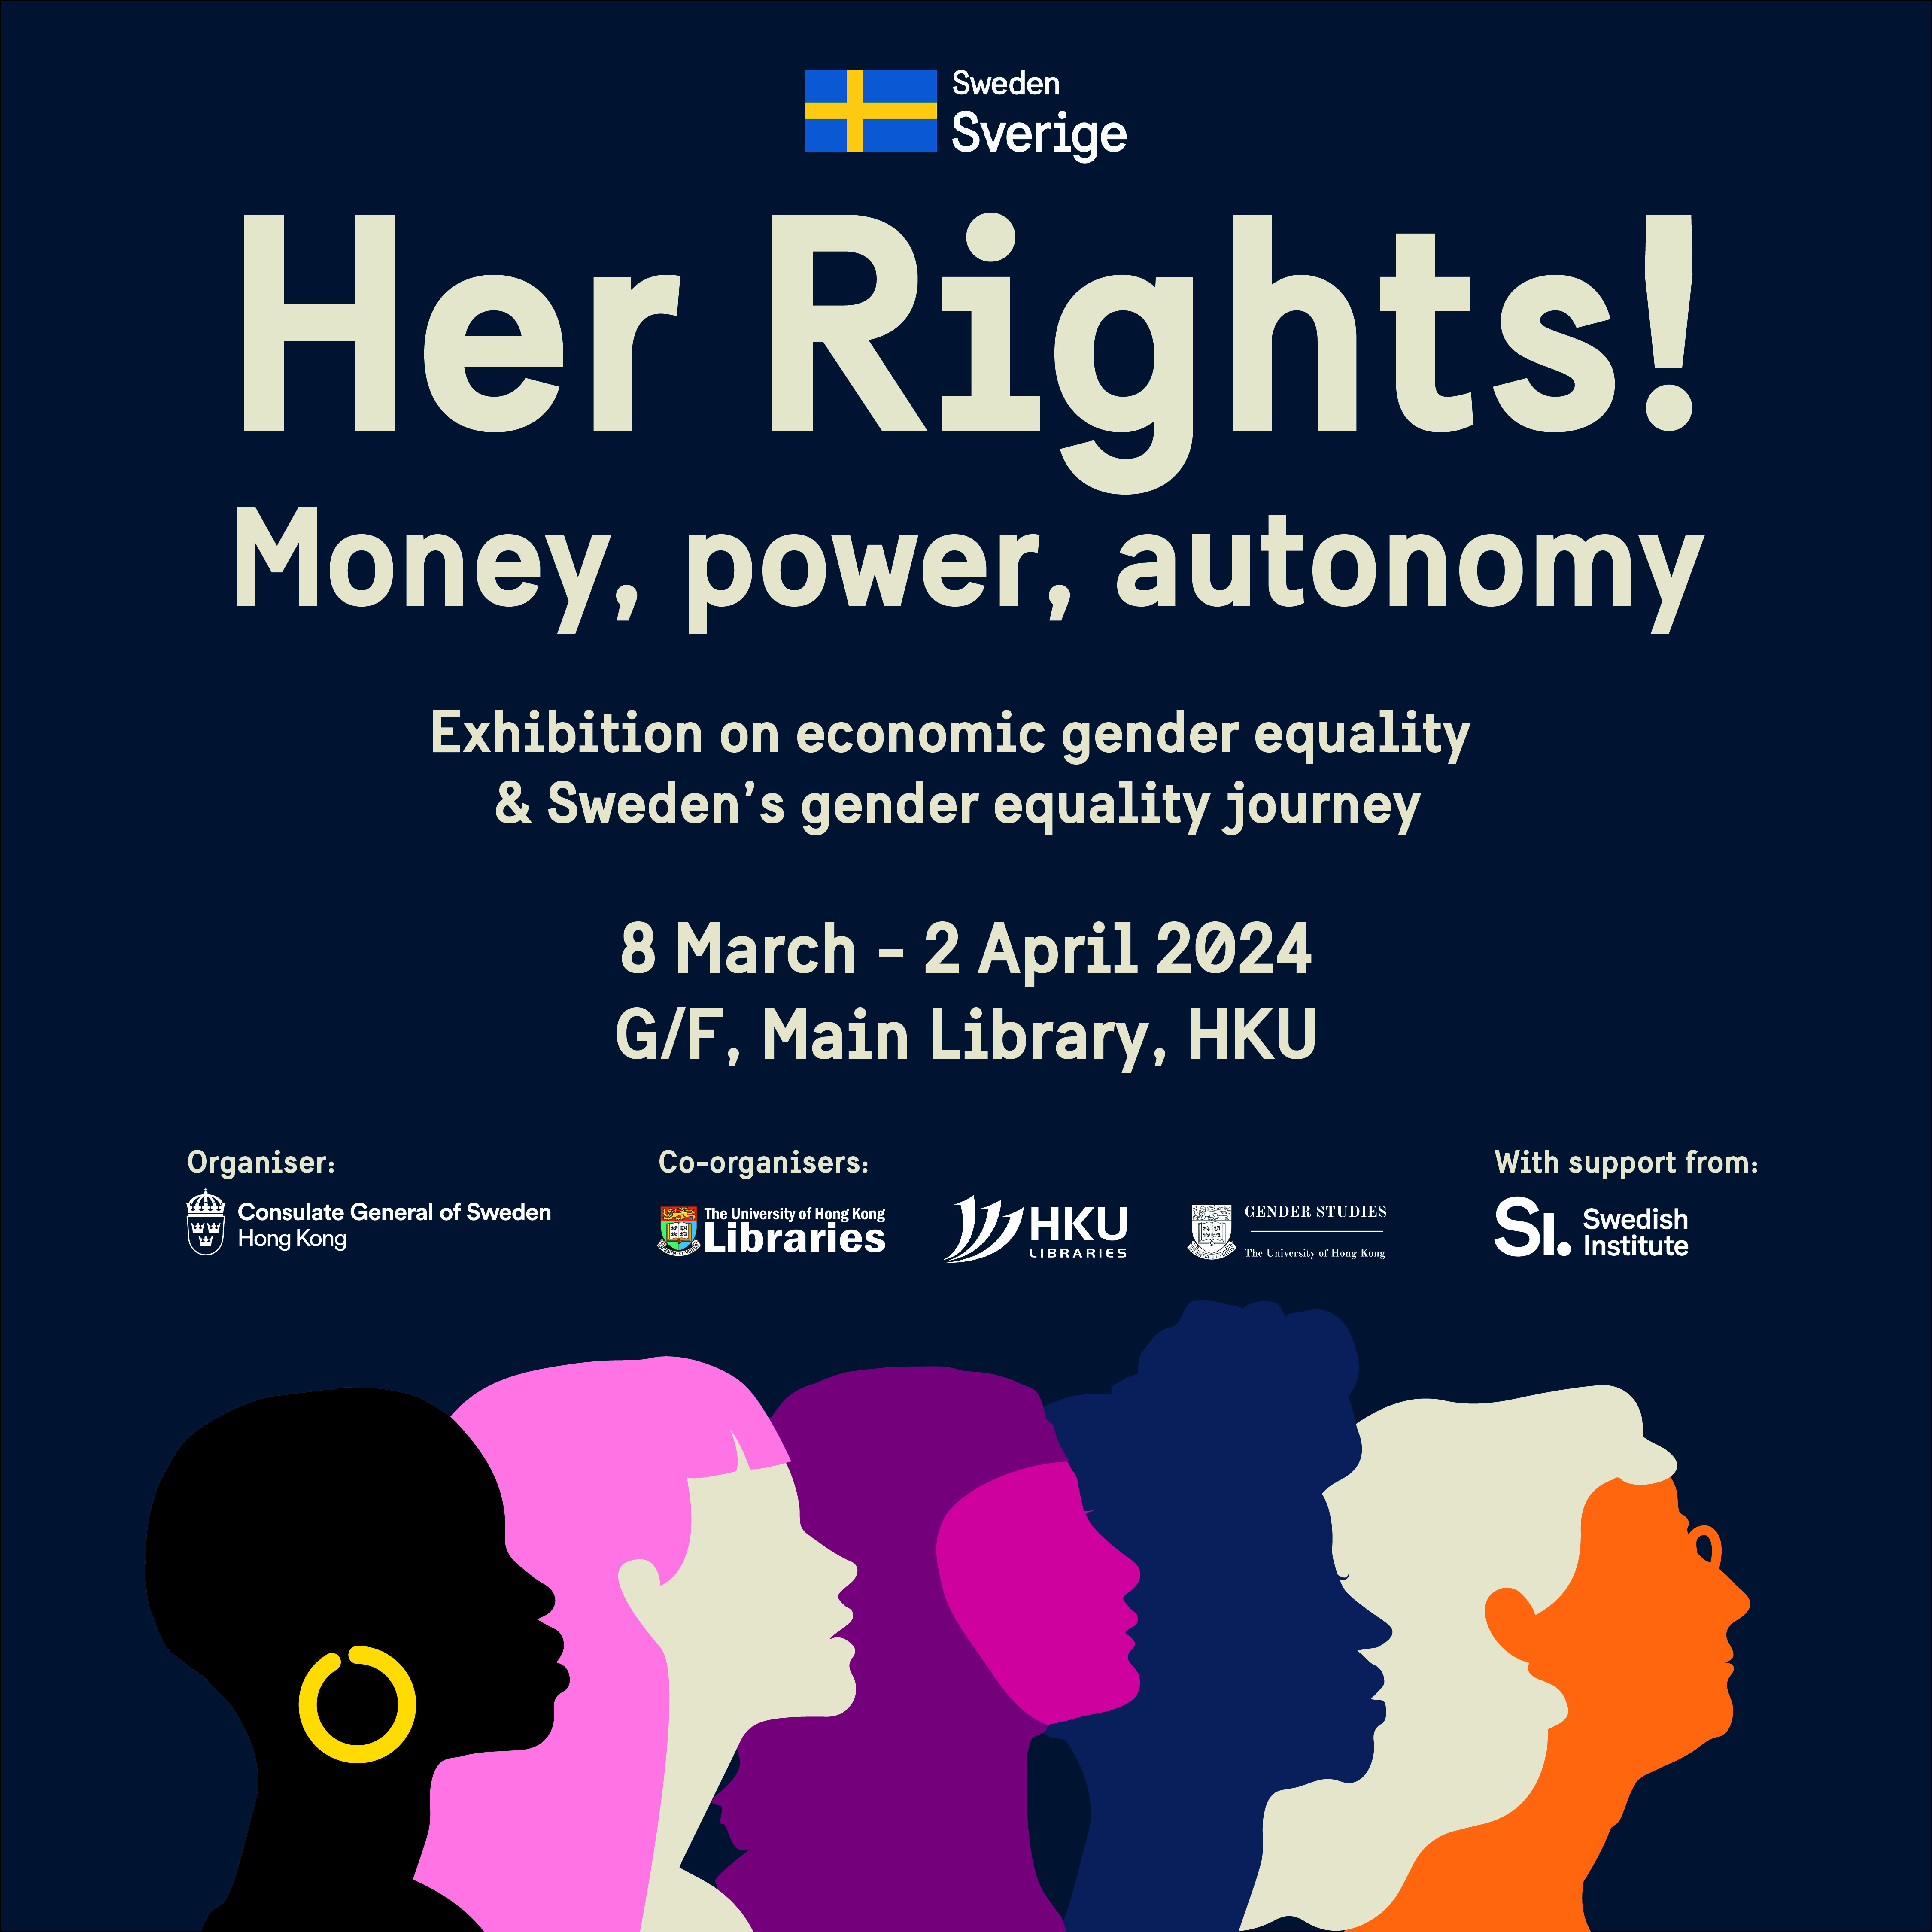 Her Rights! Money, power, autonomy